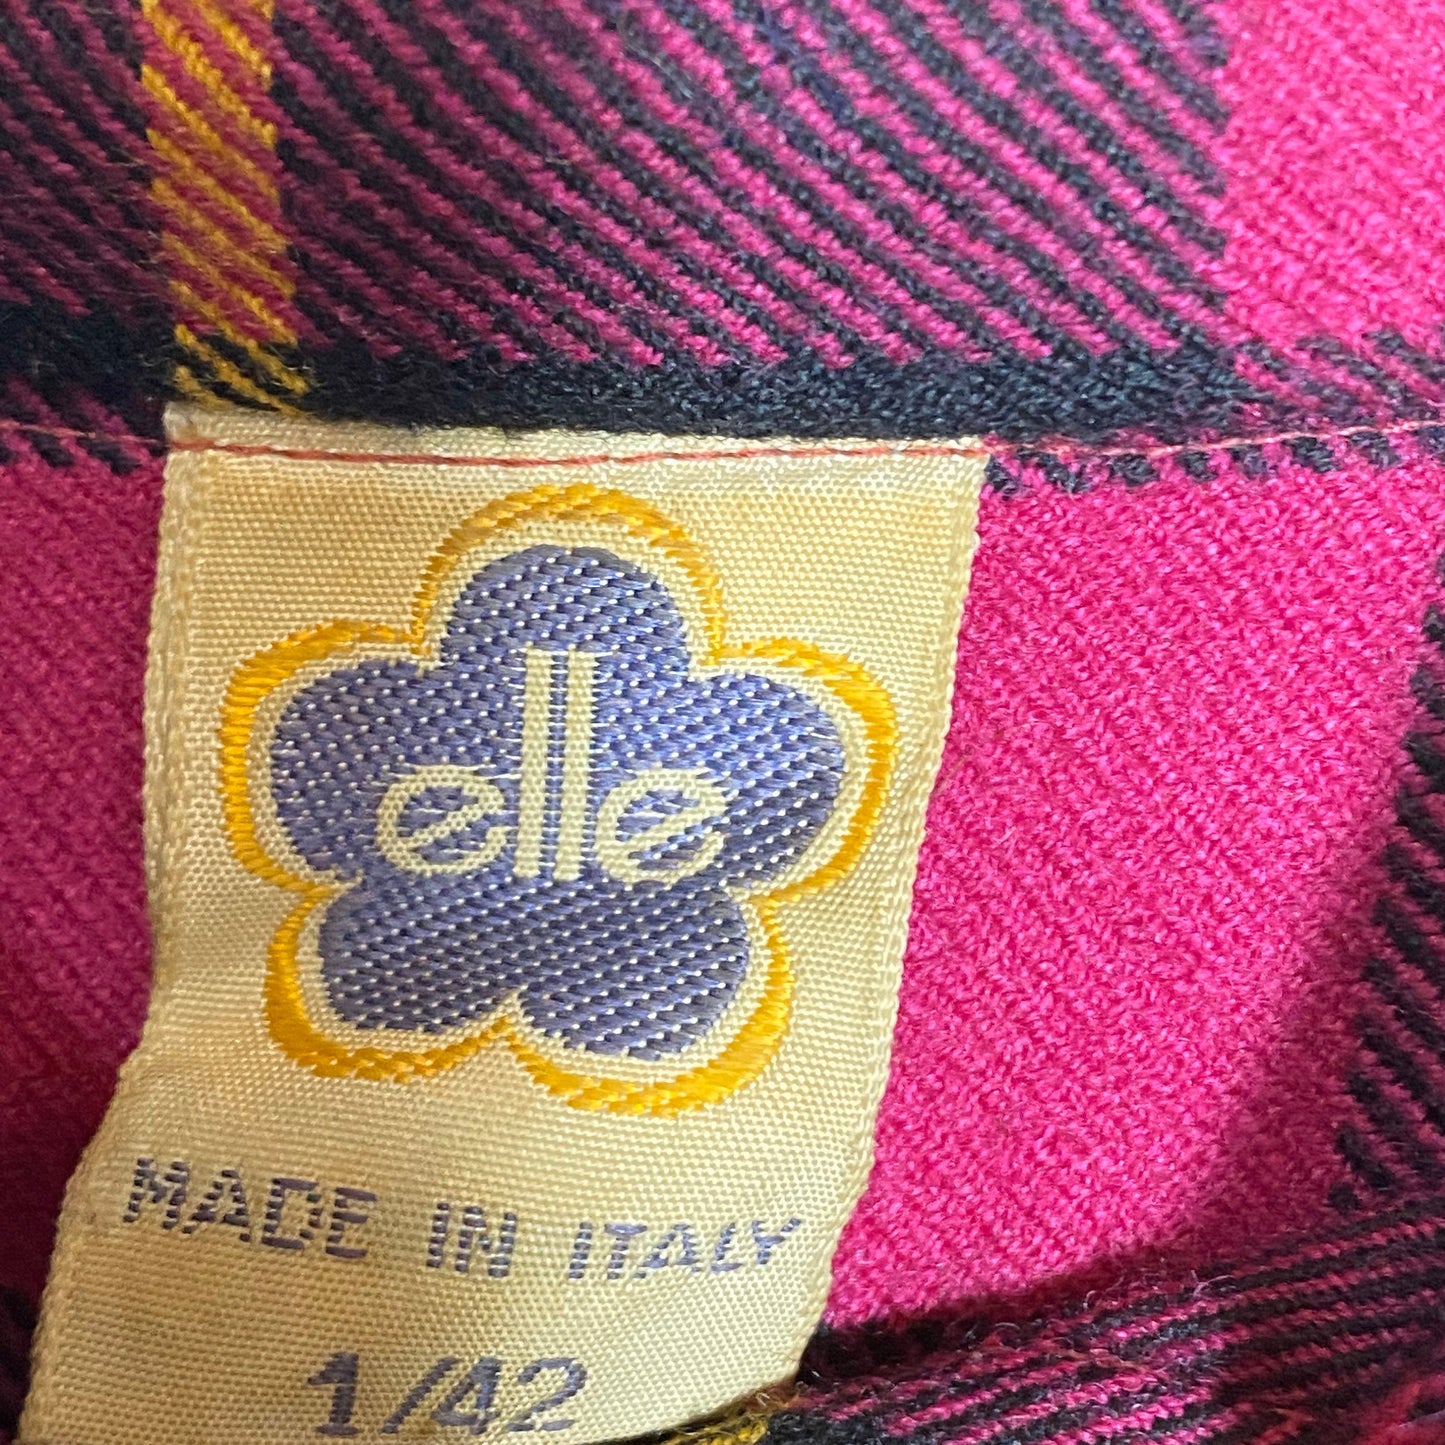 Elle purple tartan wool shirt dress sz 42, mint condition, 1970s/80s